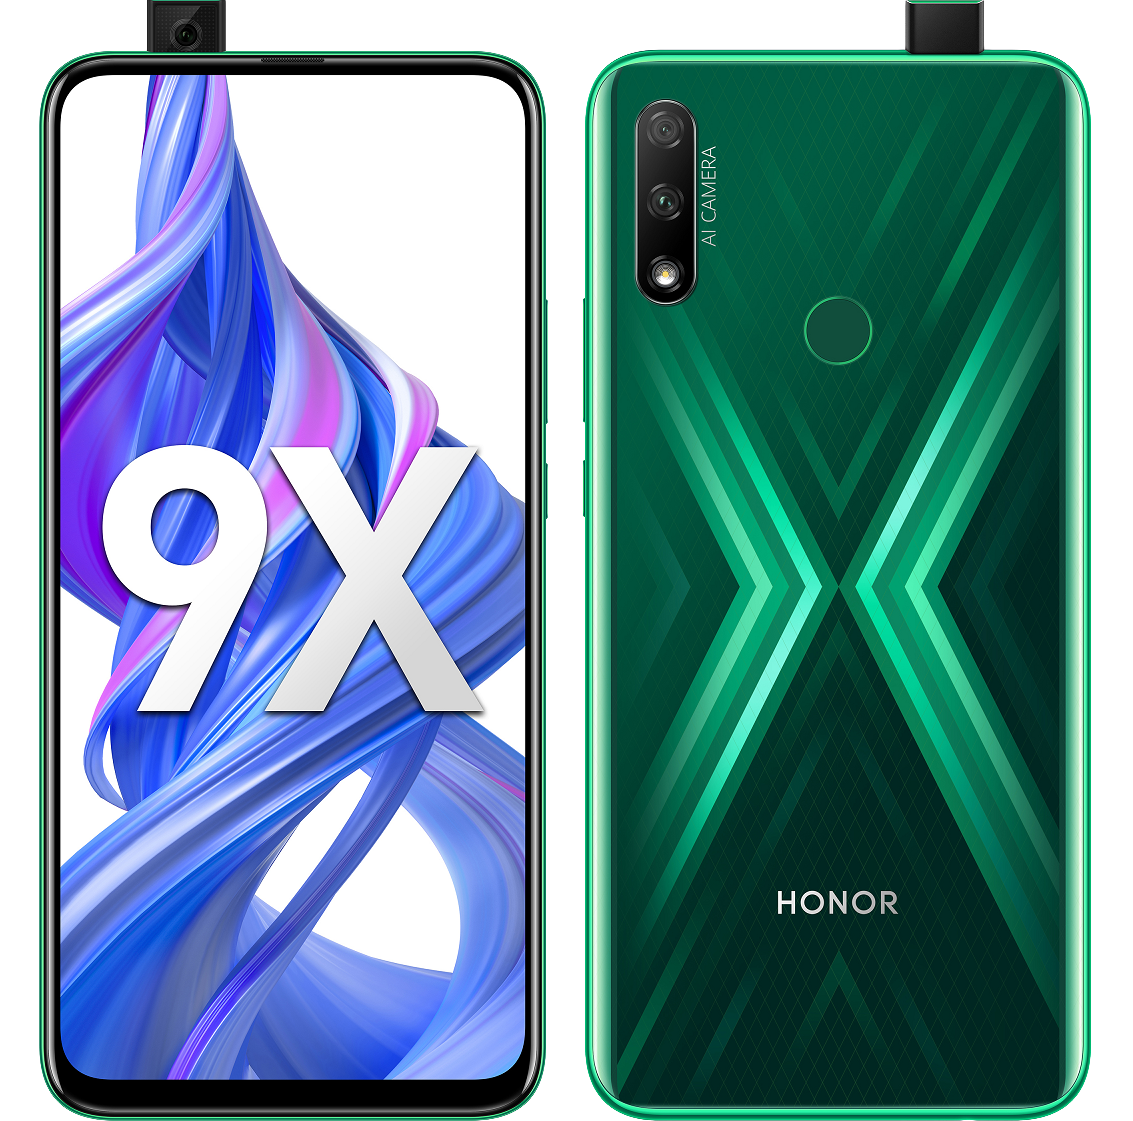 Honor 9 8 128. Хонор 9x. Honor 9x 4/128gb. Honor 9x 4/128gb Blue. Смартфон Honor 9x Premium 6/128gb.